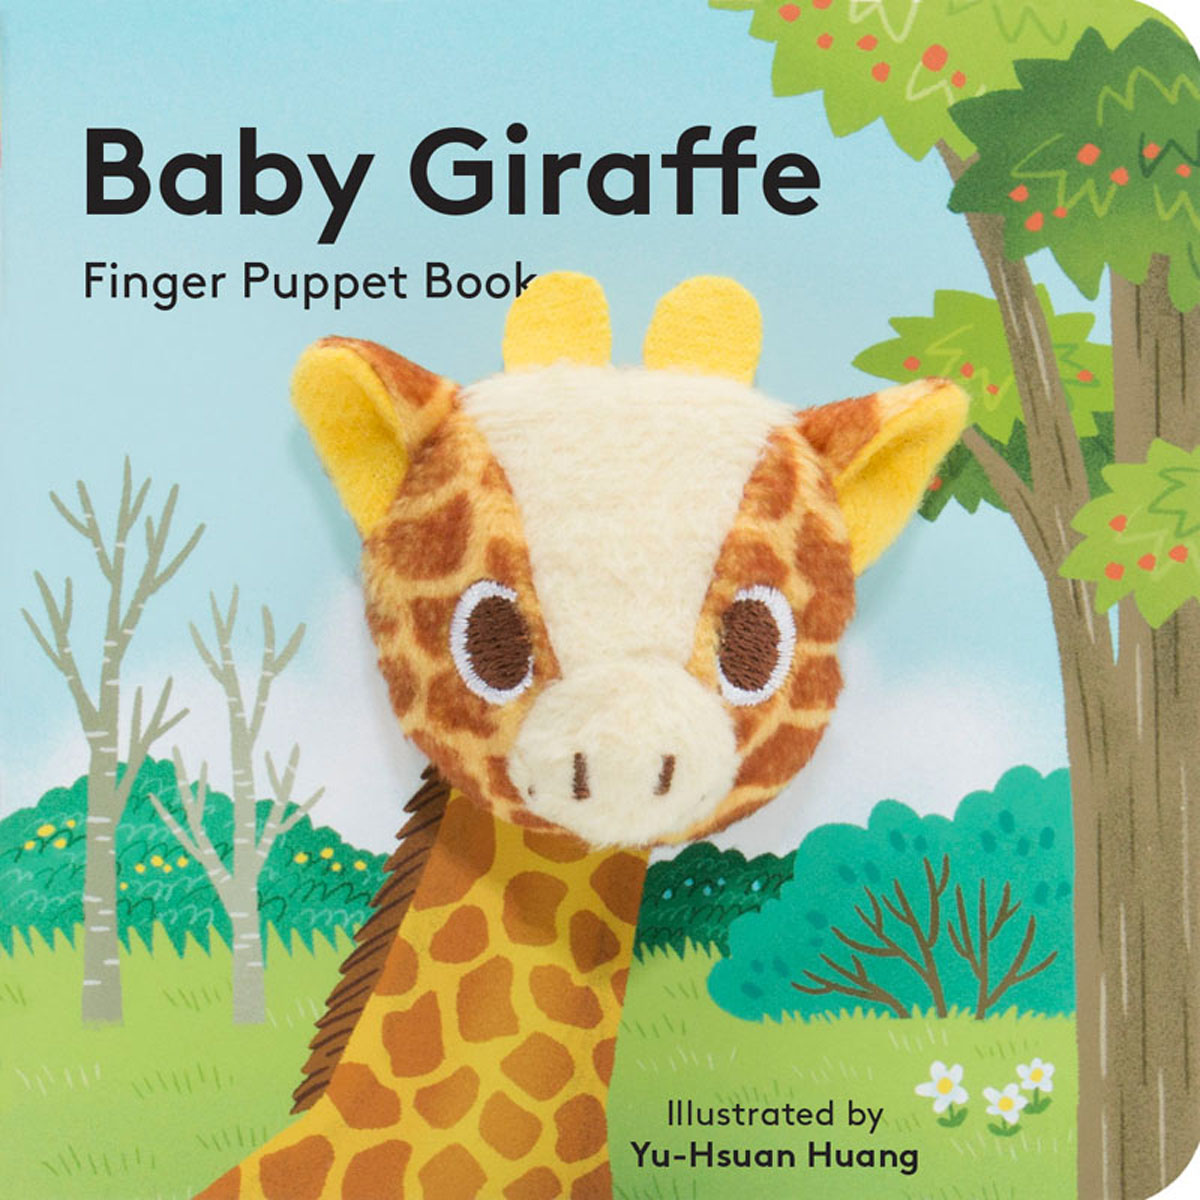 small puppet book featuring adorable baby giraffe